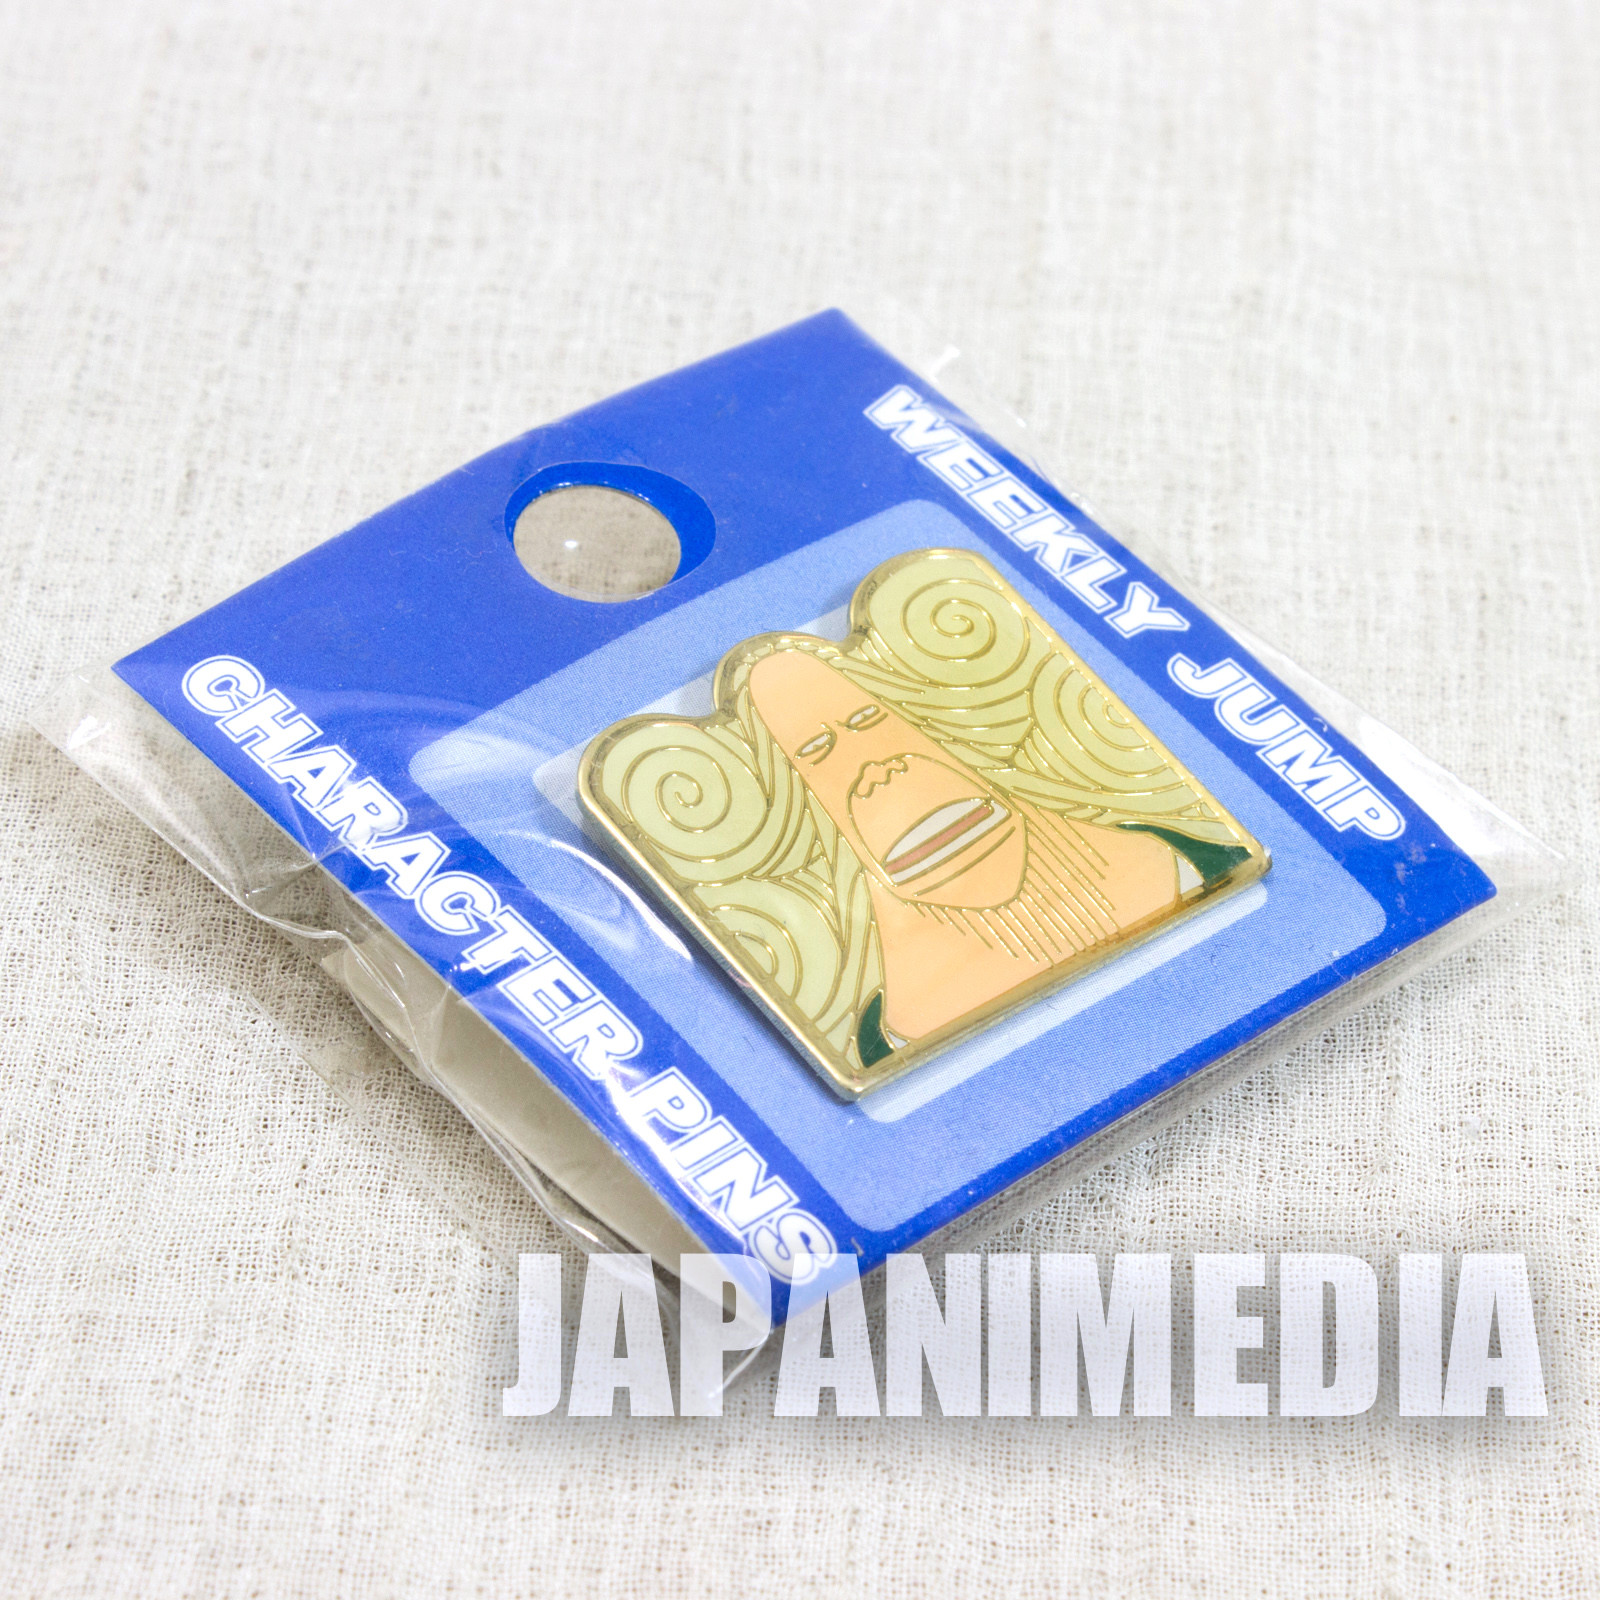 ONE PIECE Igaramu Weekly Jump Character Pins JAPAN ANIME MANGA